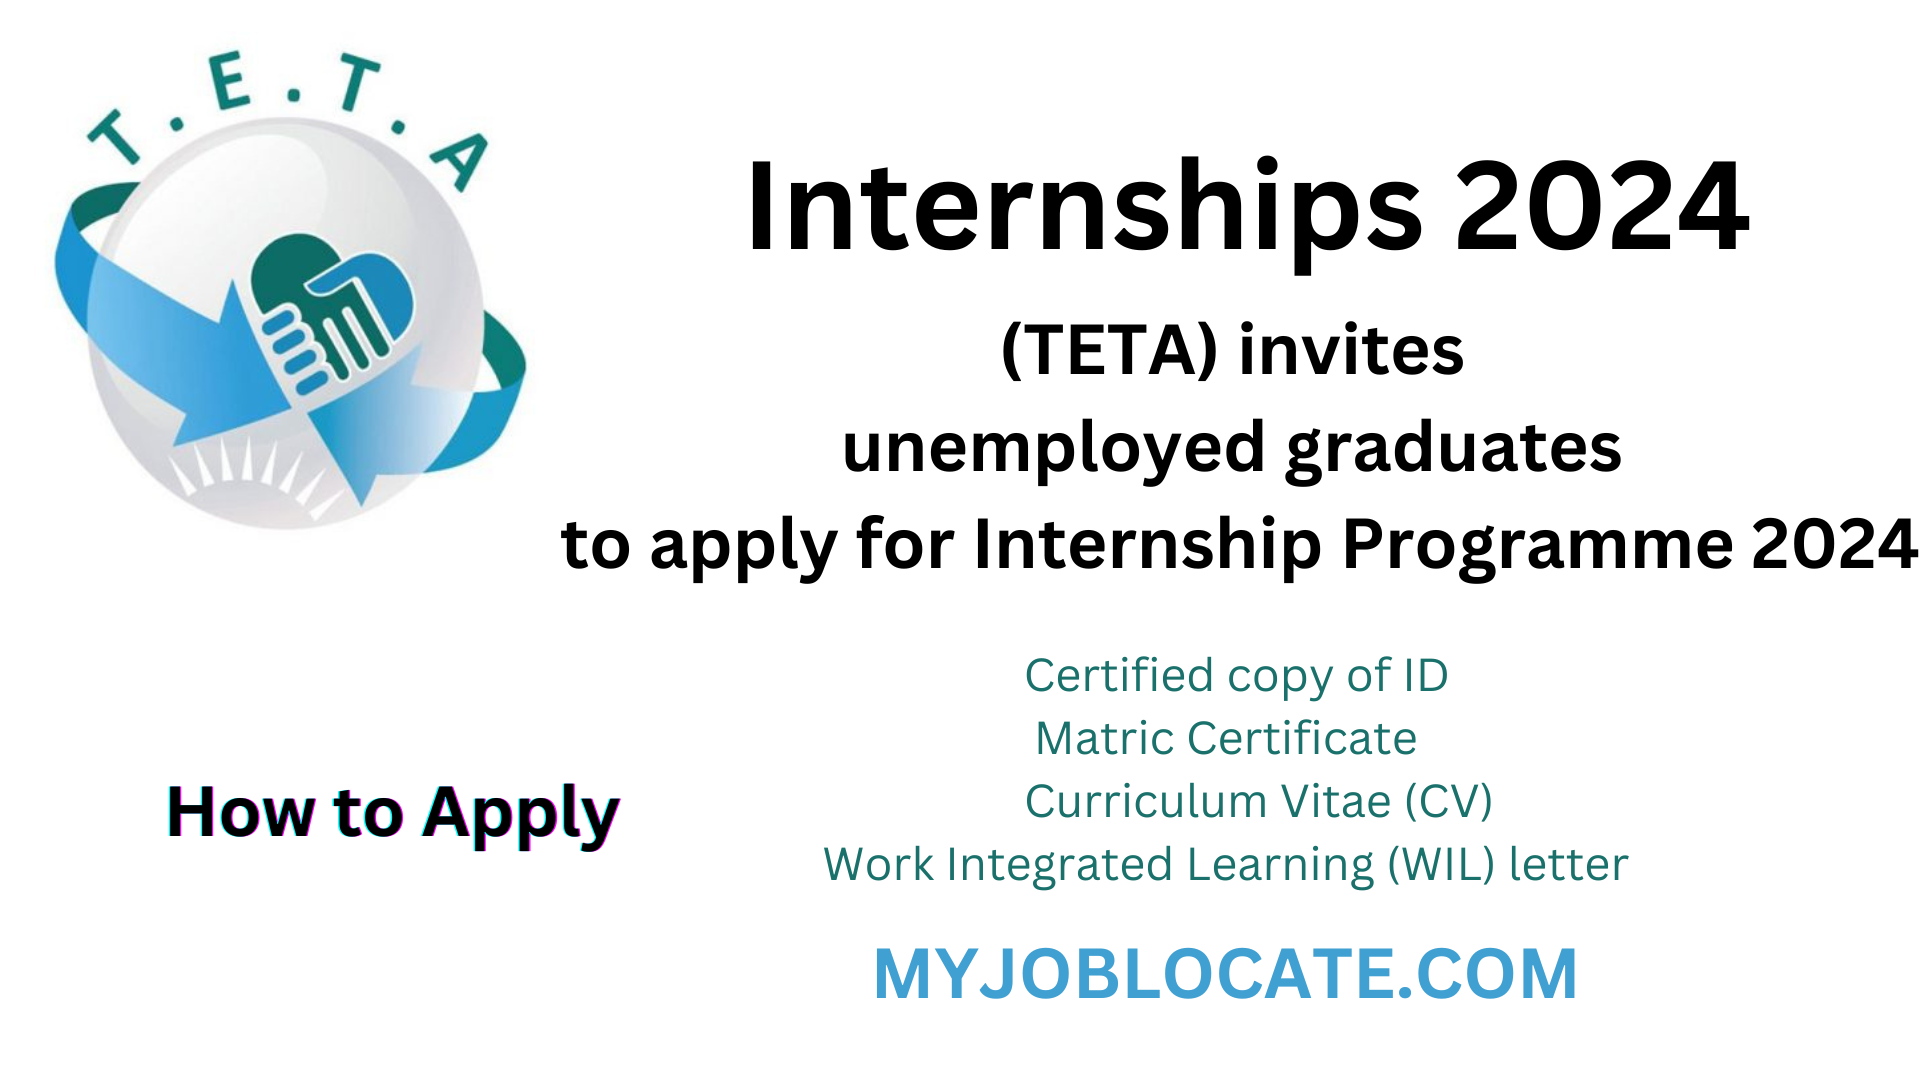 (SETA) Internship Programme 2024